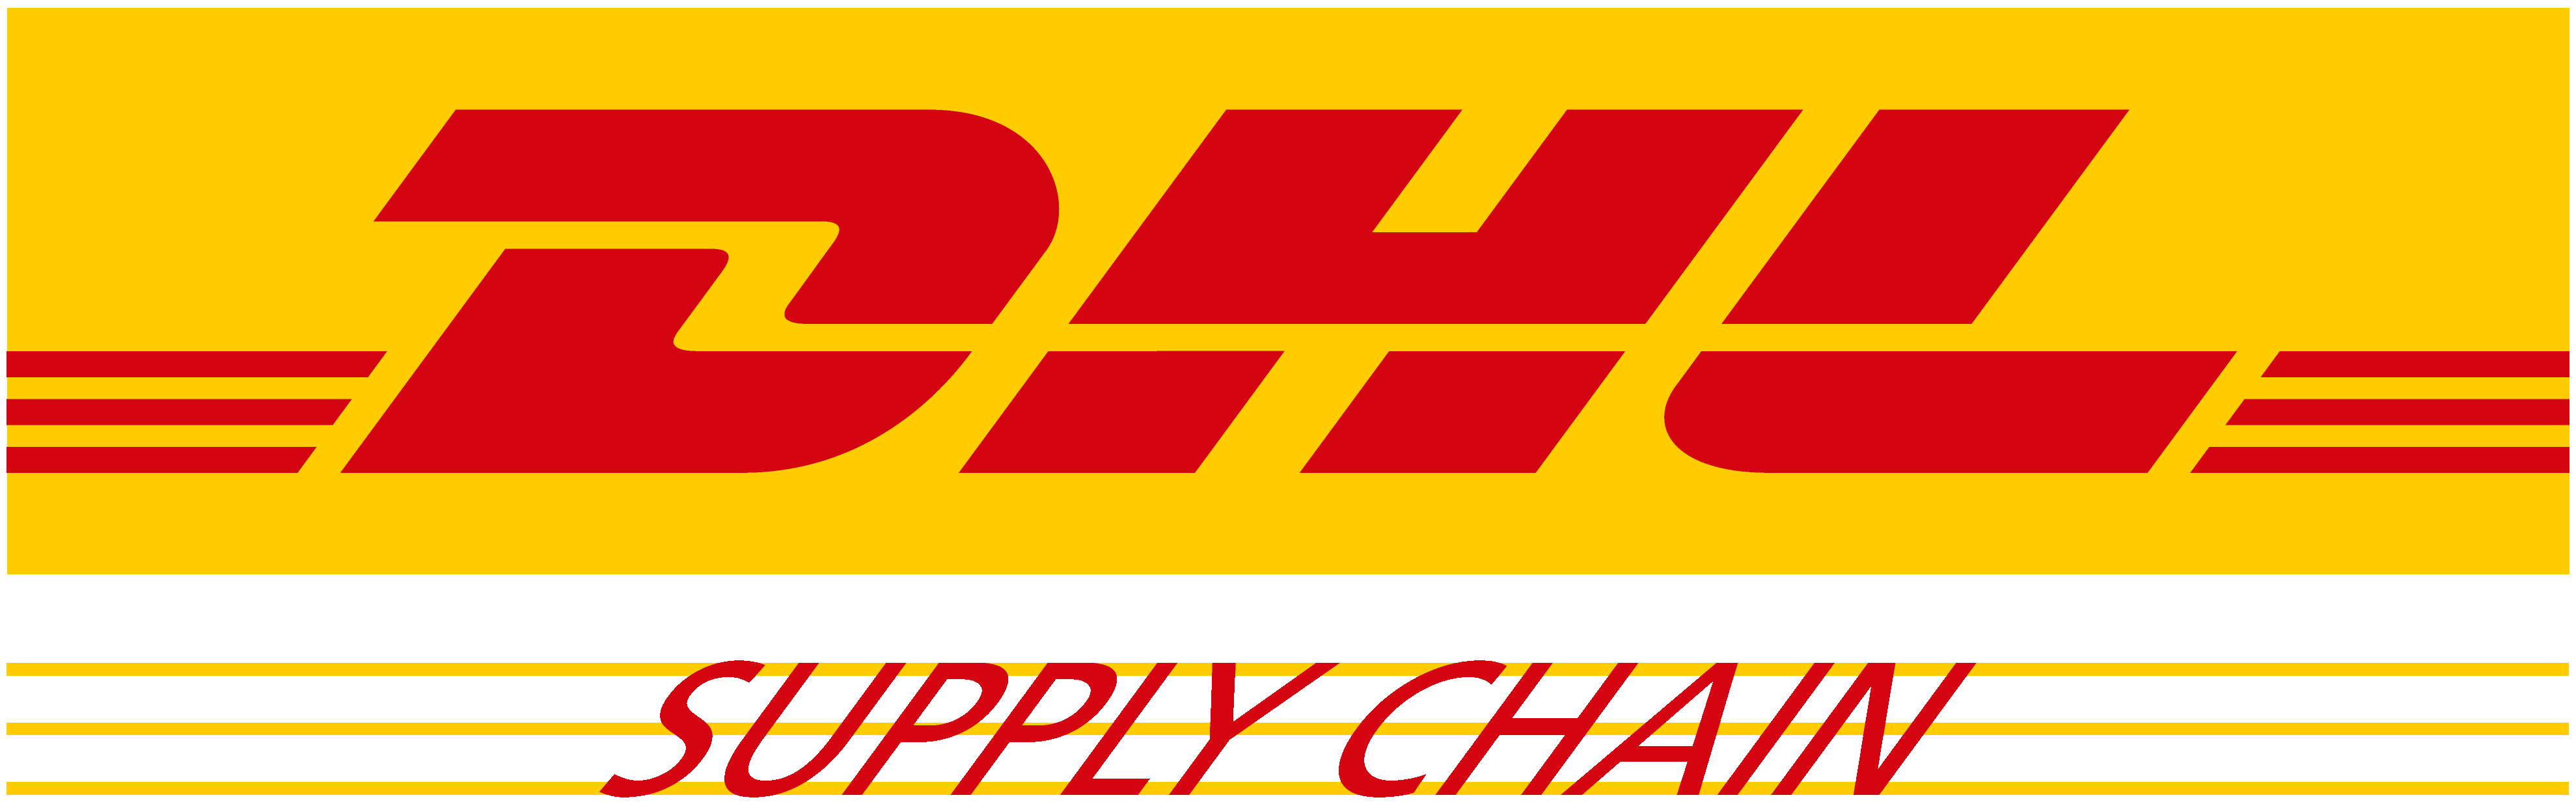 DHL Supply Chain Logo - Motorola solution for DHL Supply Chain warehouse Mobile Radio